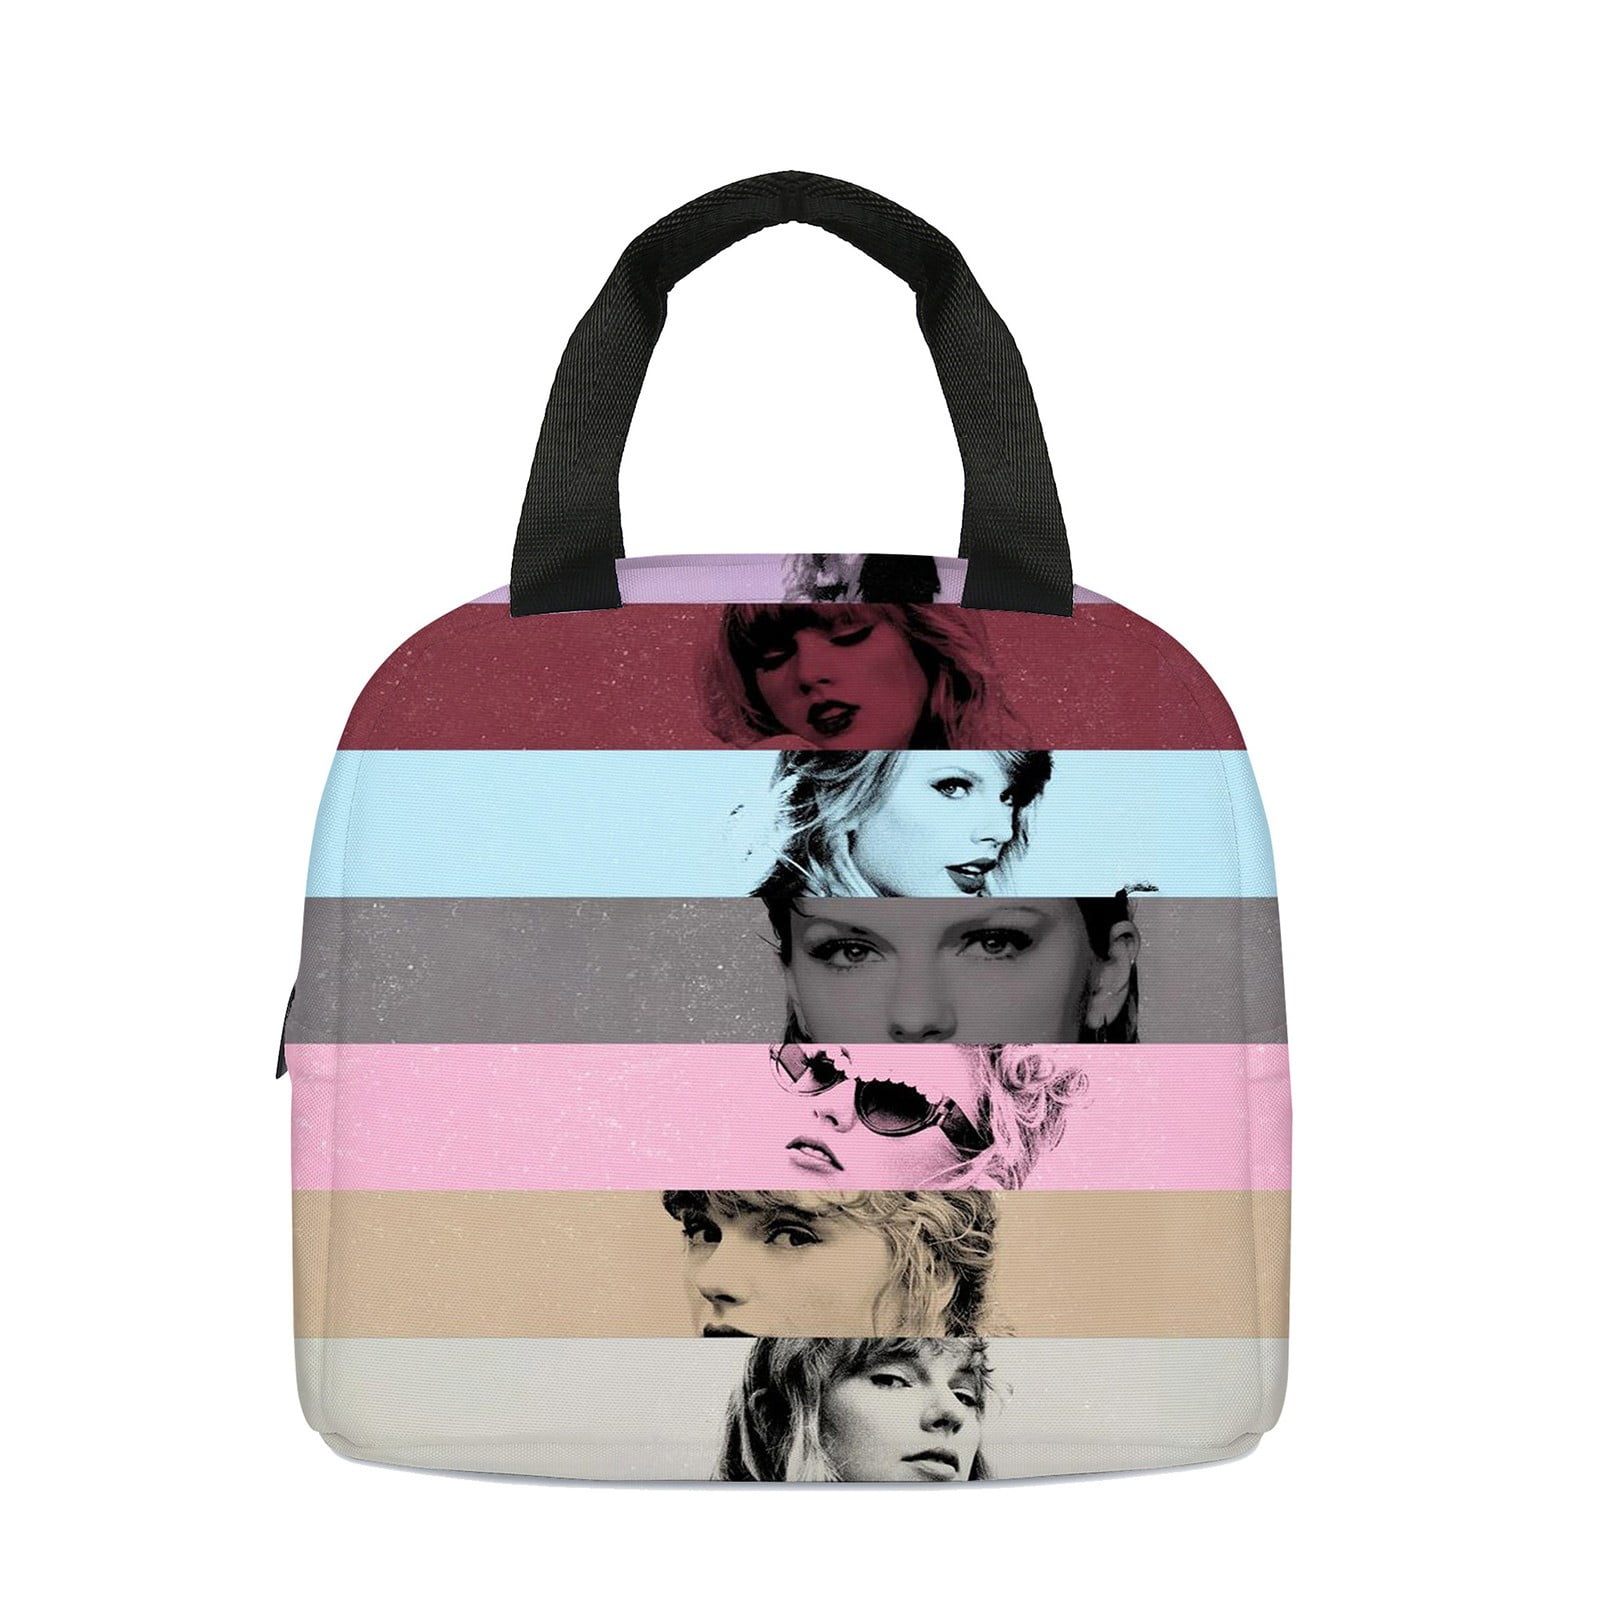 16 Inch Taylor Swift Backpack School Bag+Lunch Bag+Pencil Bag - giftcartoon